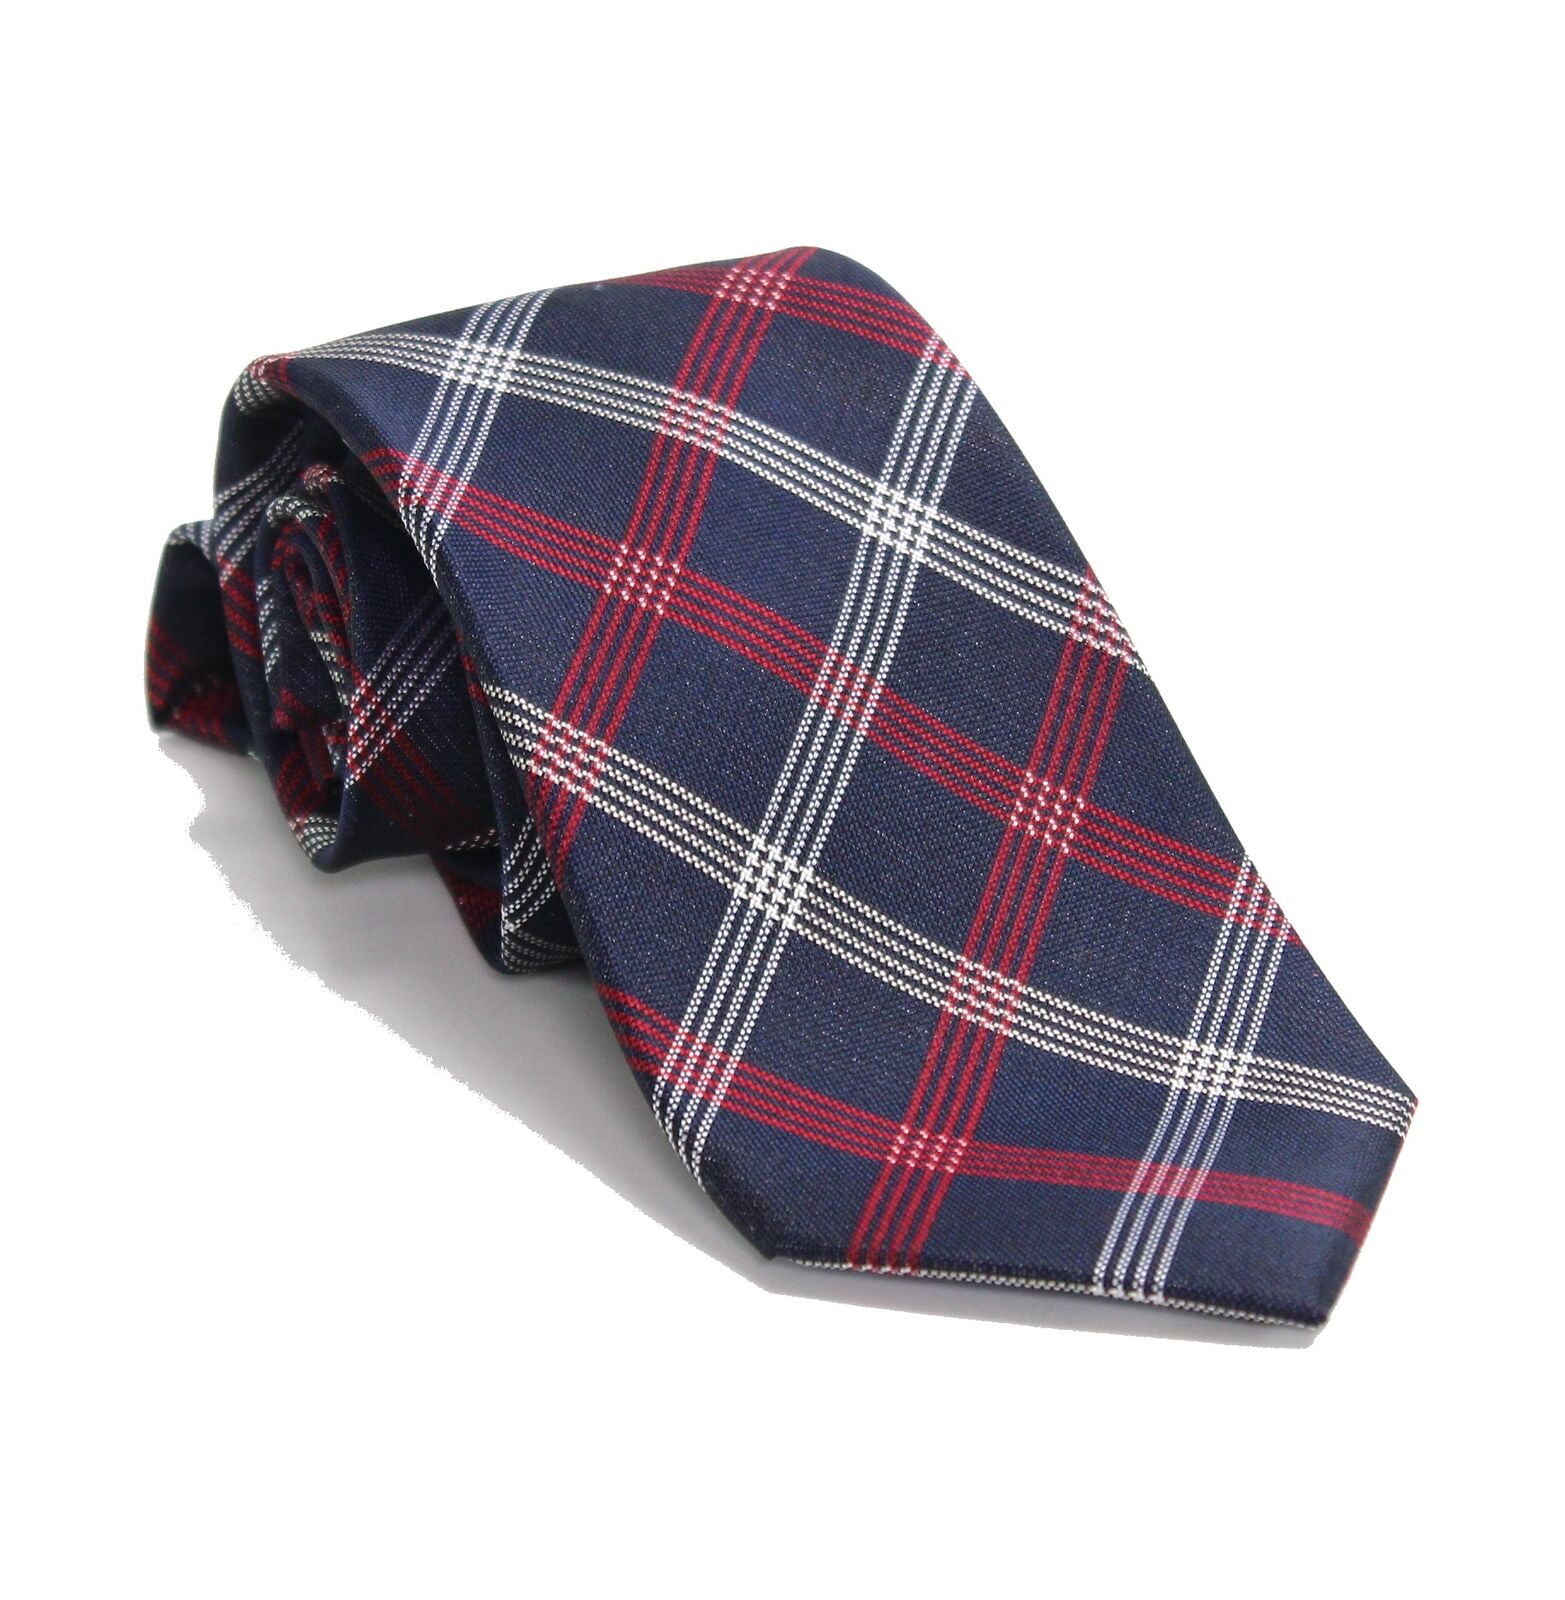 Tommy Hilfiger Men's Navy Red Neck Tie Silk Windowpane Plaid, One Size - NEW -